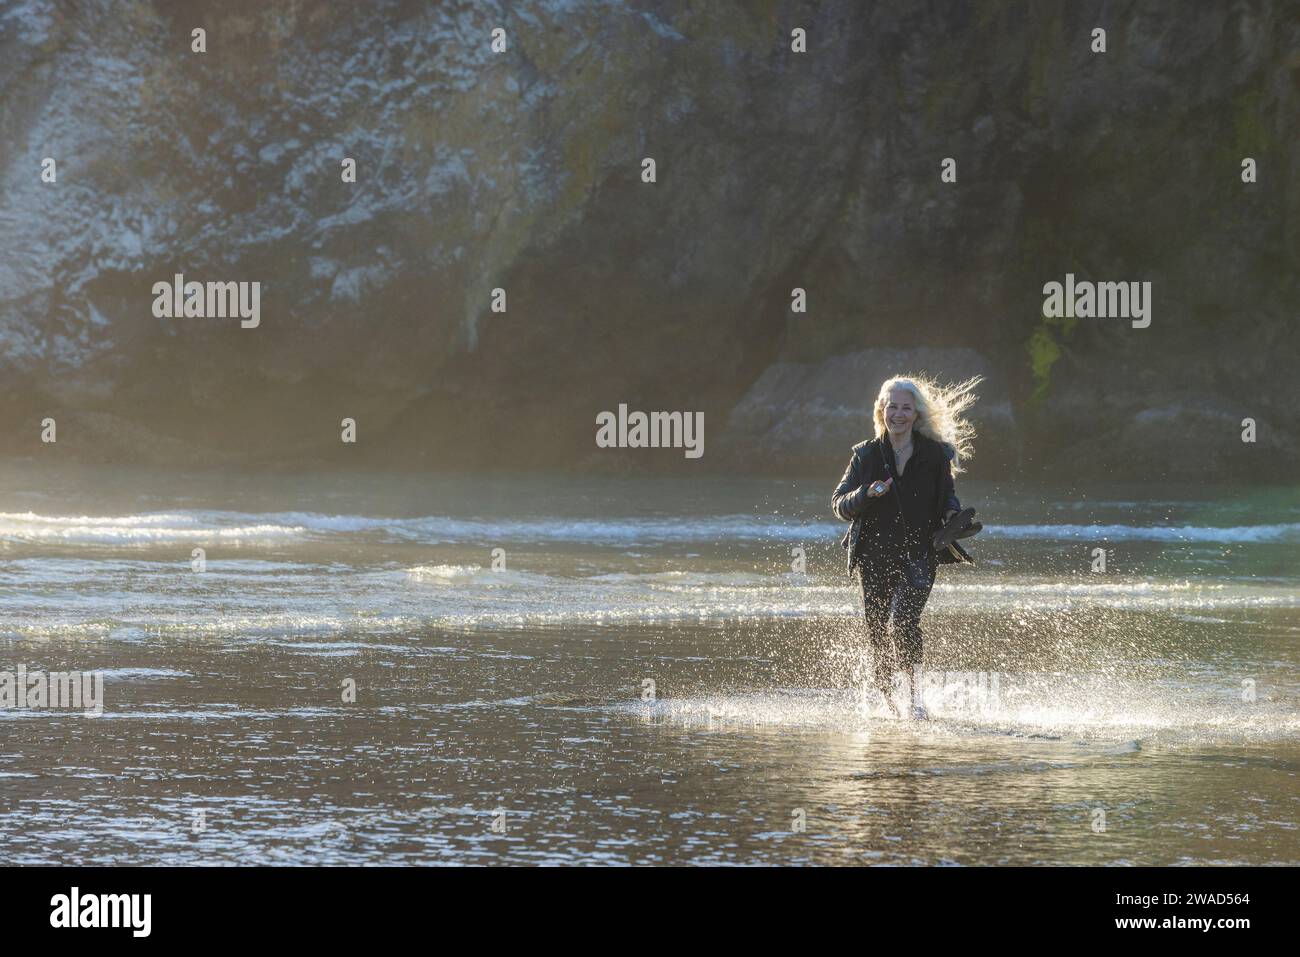 USA, Oregon, Newport, Woman running on sandy beach and splashing water Stock Photo